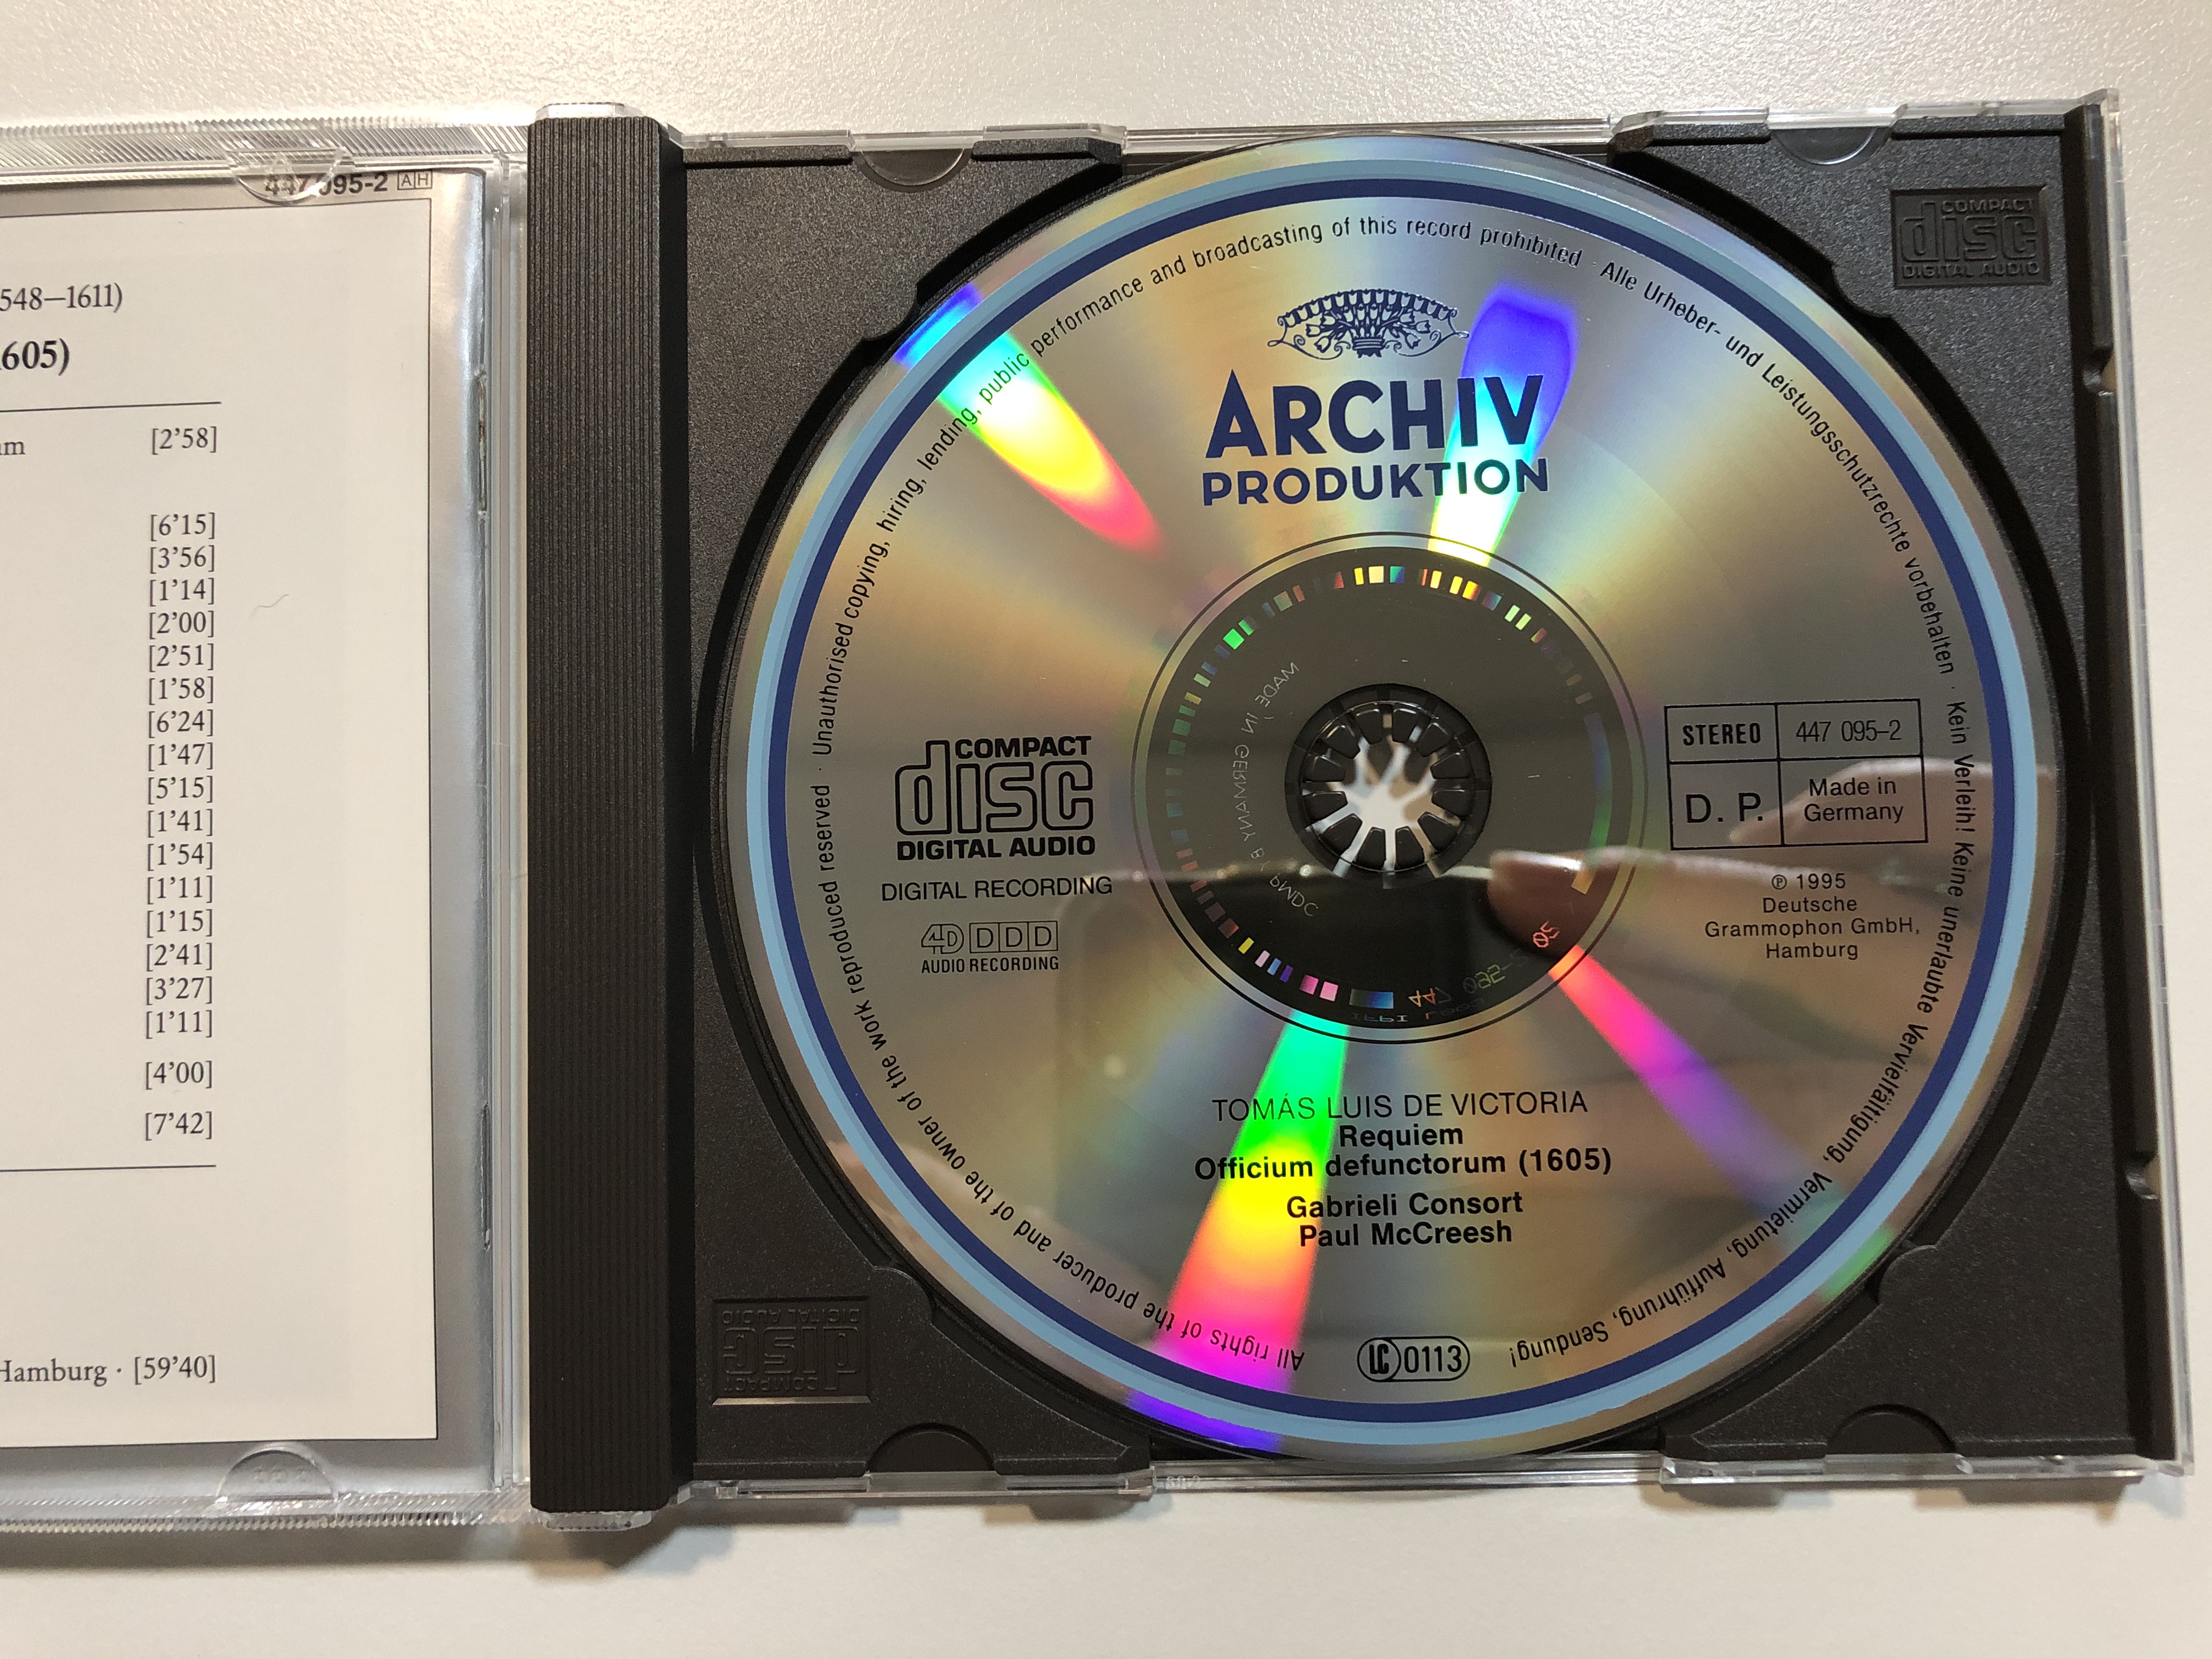 victoria-requiem-officium-defunctorum-1605-gabrieli-consort-paul-mccreesh-archiv-produktion-audio-cd-1995-stereo-447-095-2-10-.jpg